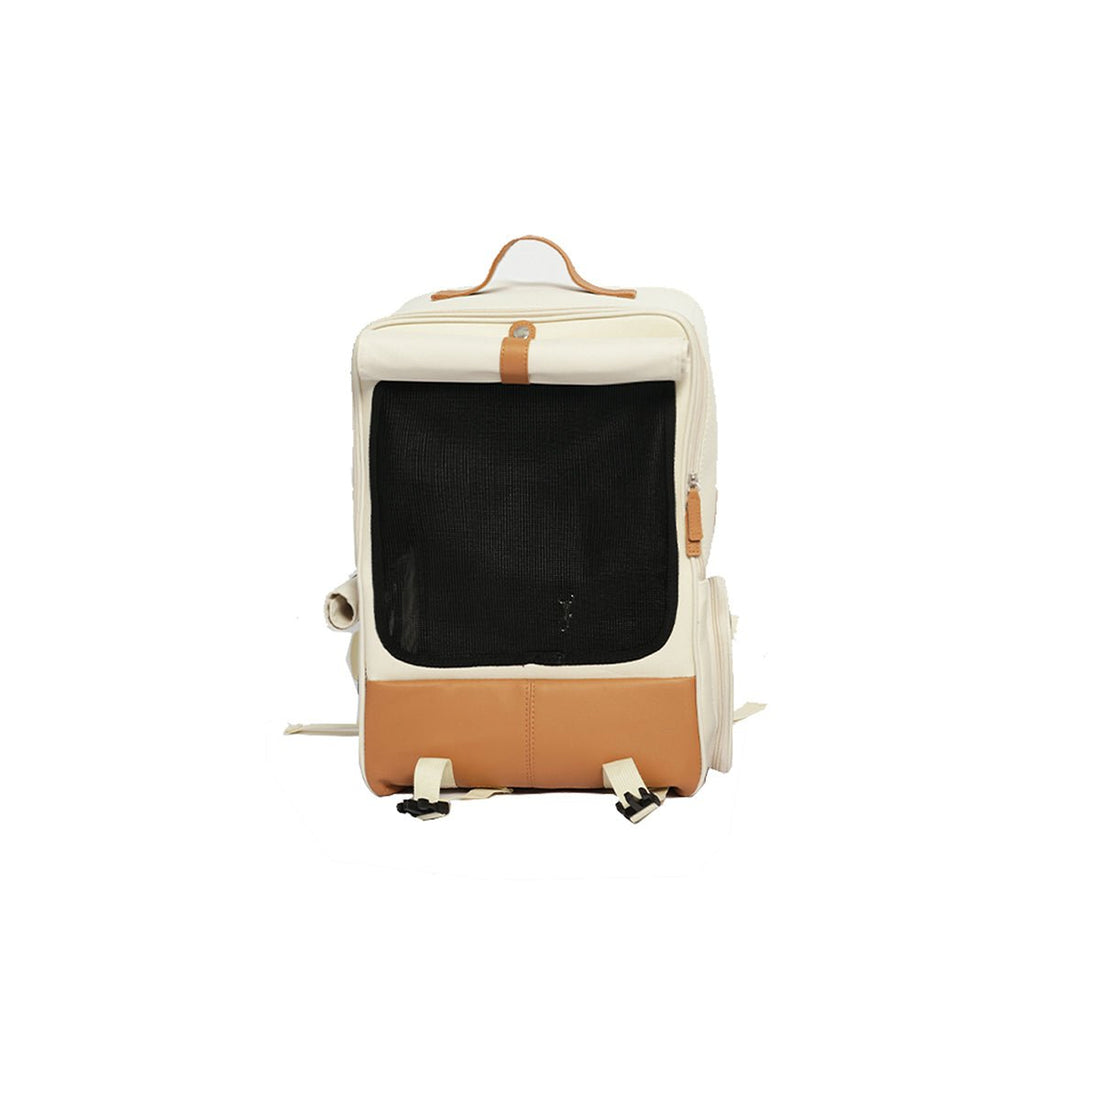 Hazelnut Breathable Mocha Pet Carrier Backpack - 0cm